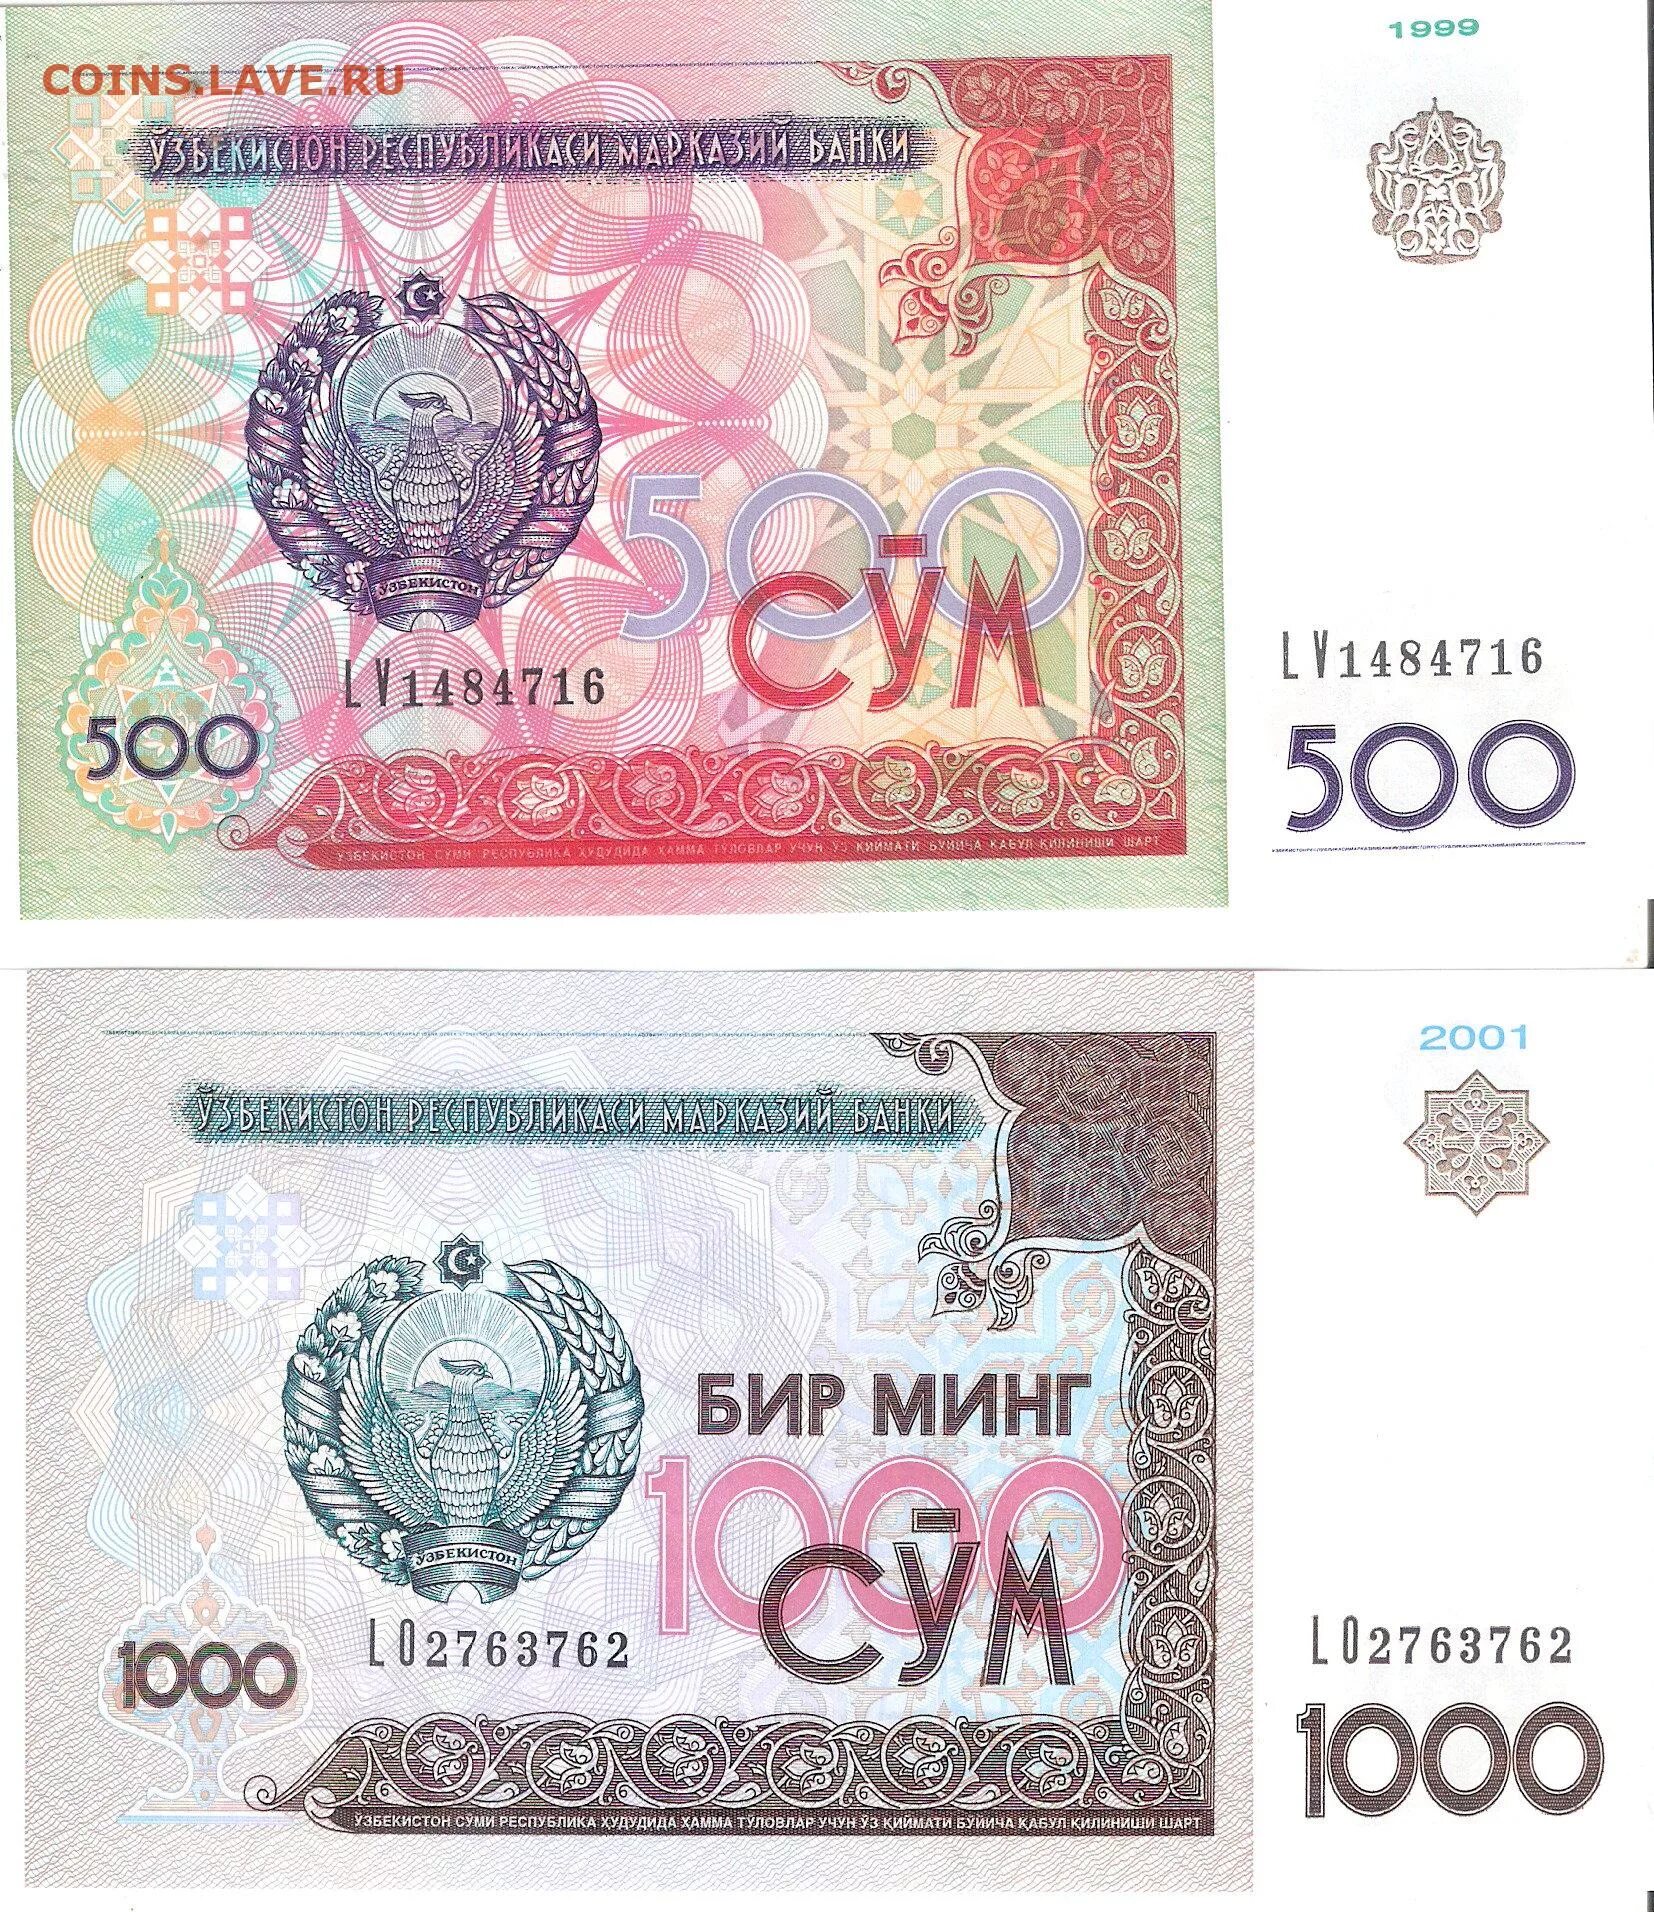 Сум ч. 500 Сўм. Узбекистан 500 сом 1999. Банкнота 500 сум Узбекистан. Узбекистан 1000 сум 2001.